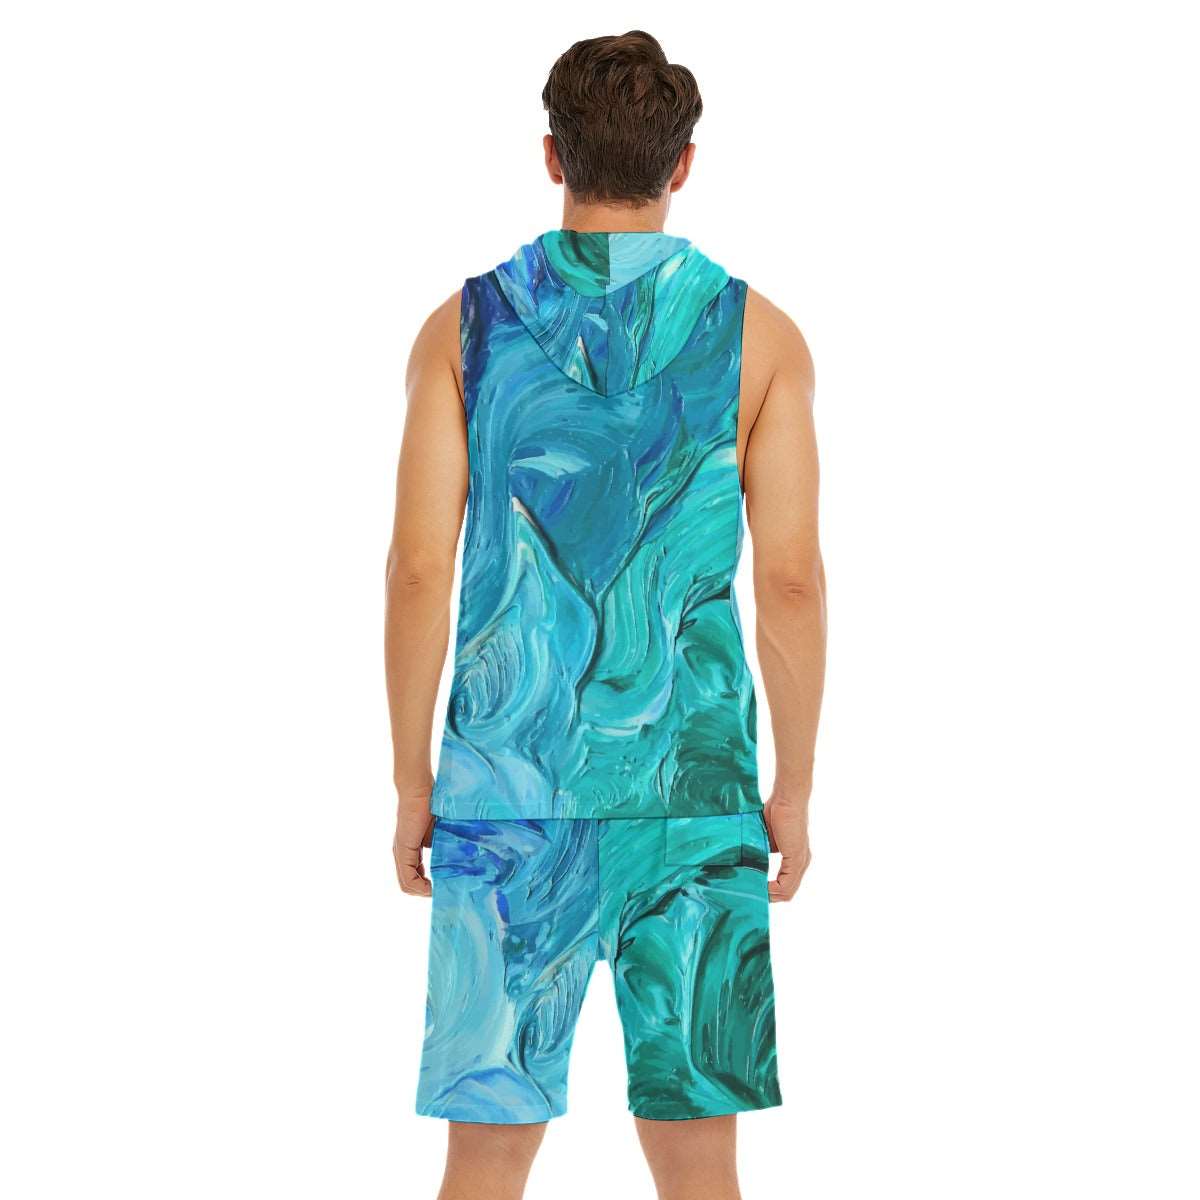 Blue Art Dragon Sleeveless Vest And Shorts Sets